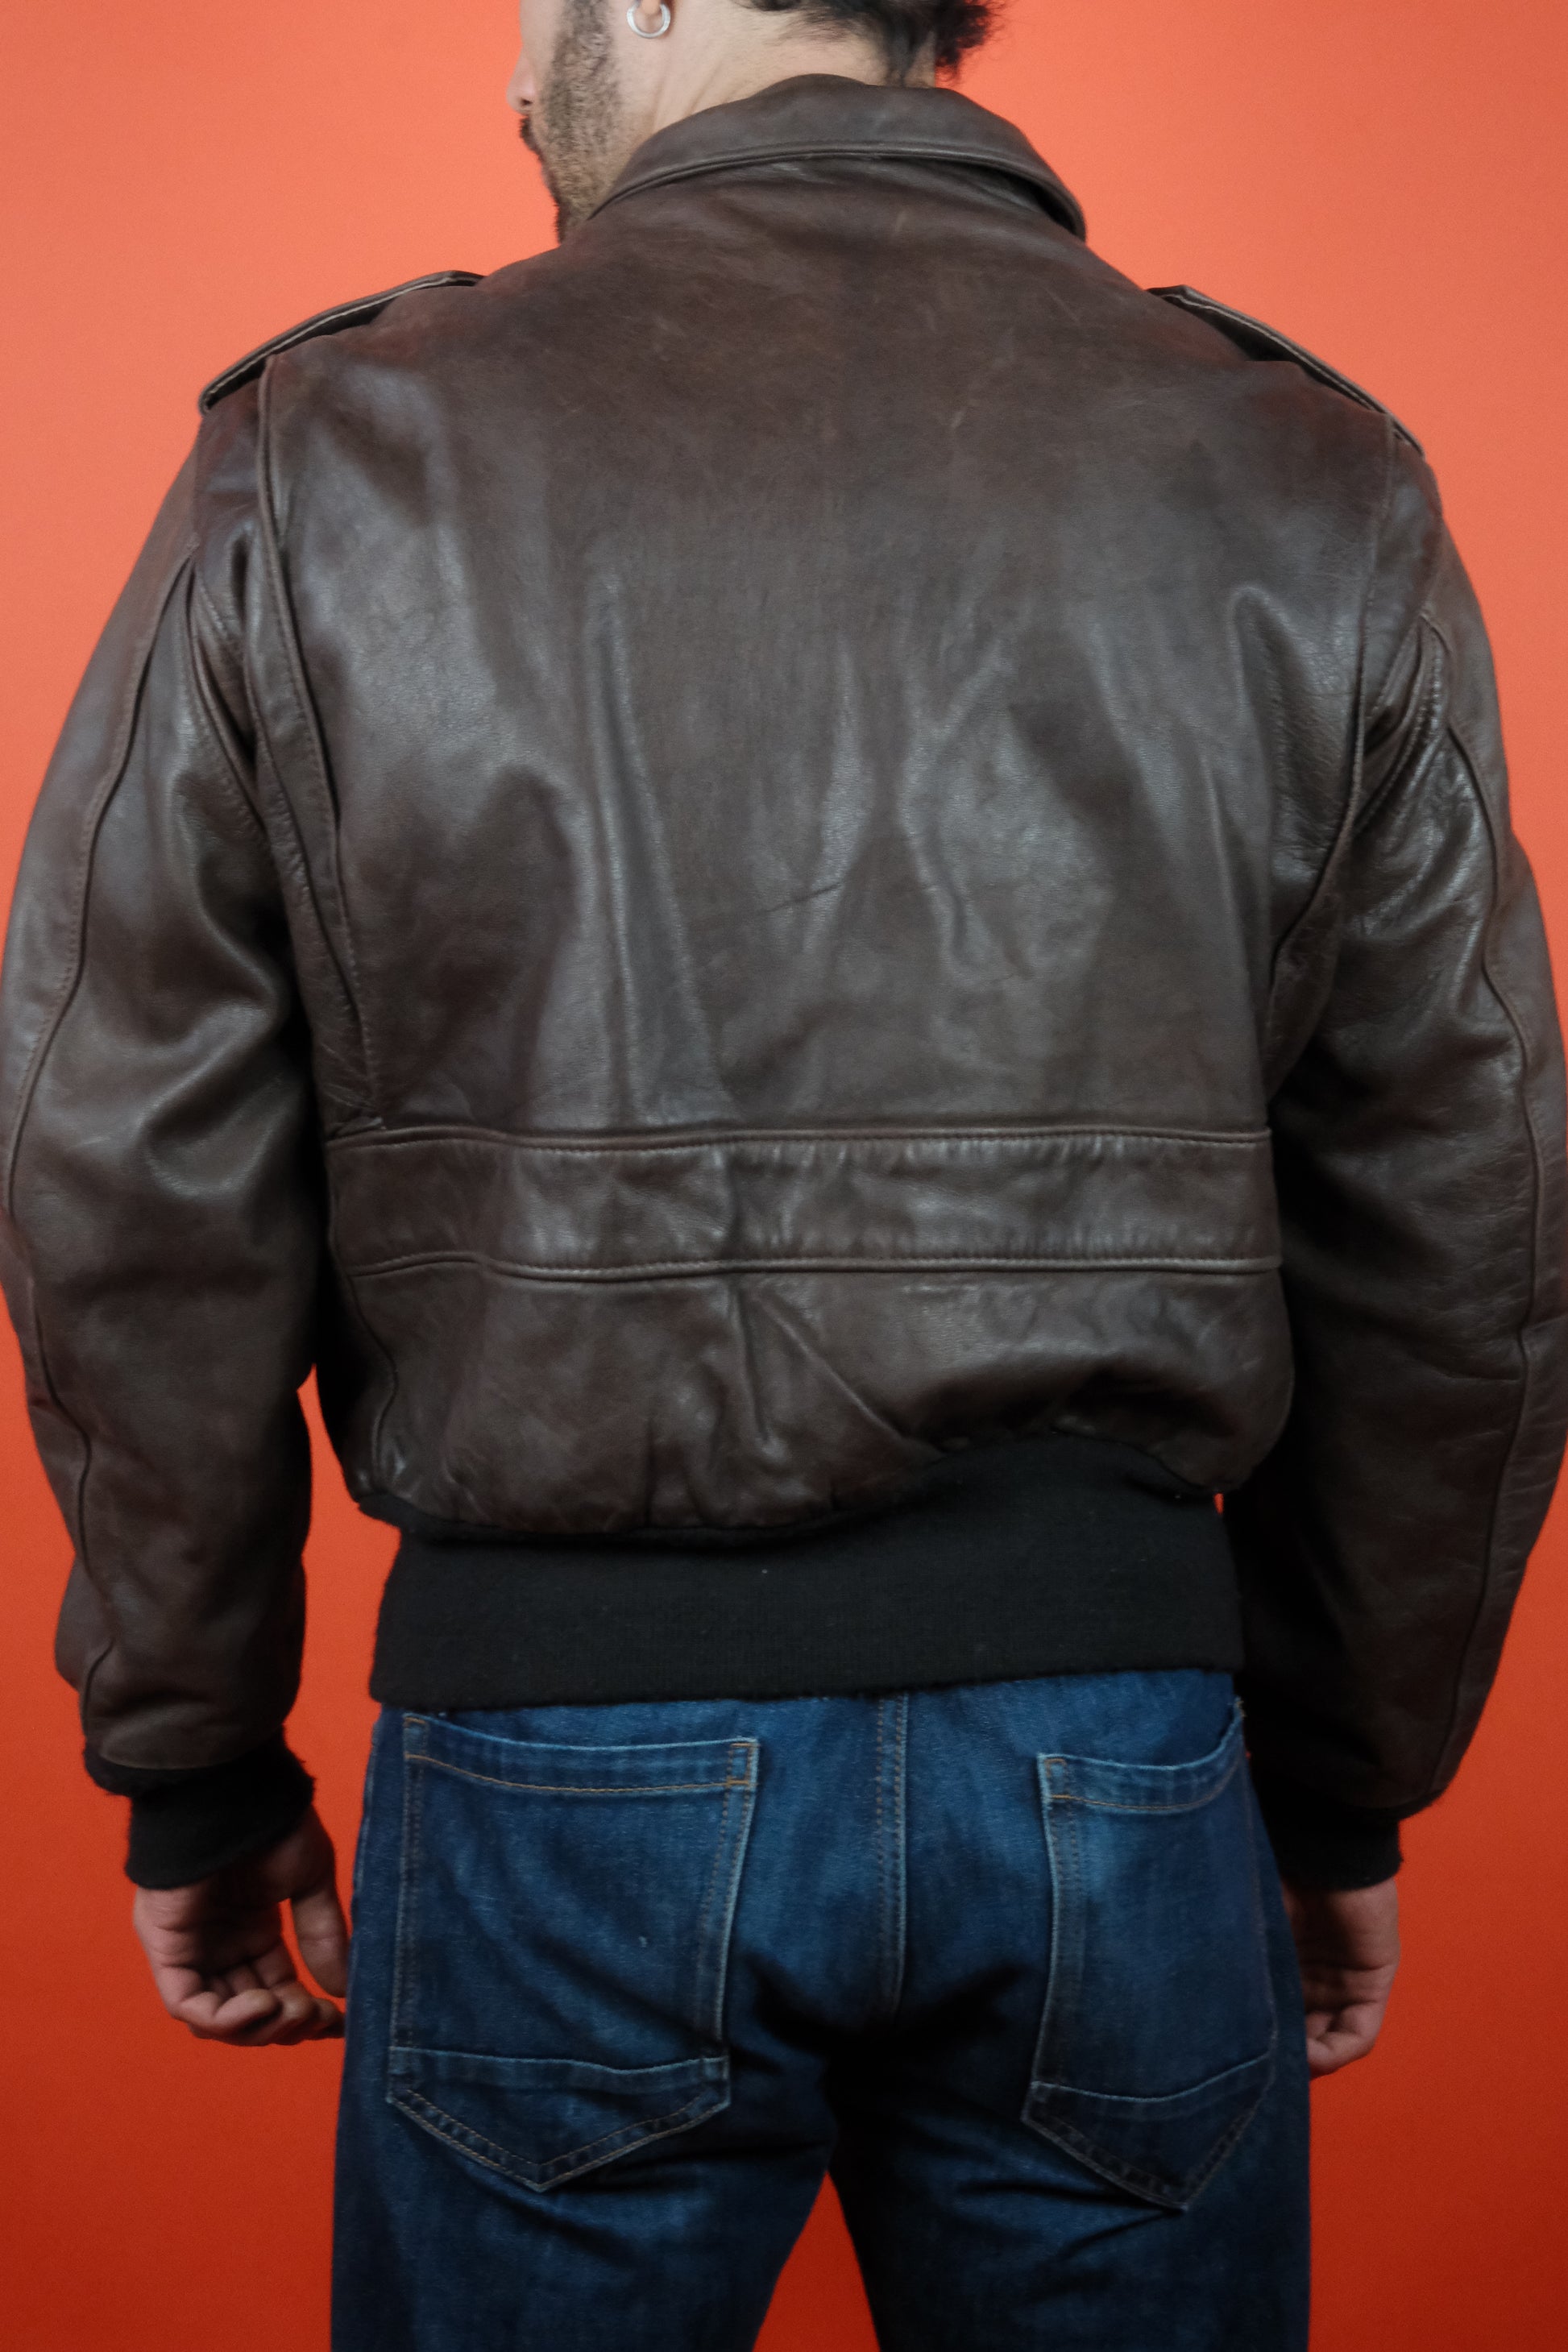 Schott Brown Leather Jacket Type A-2 'L/44' - vintage clothing clochard92.com